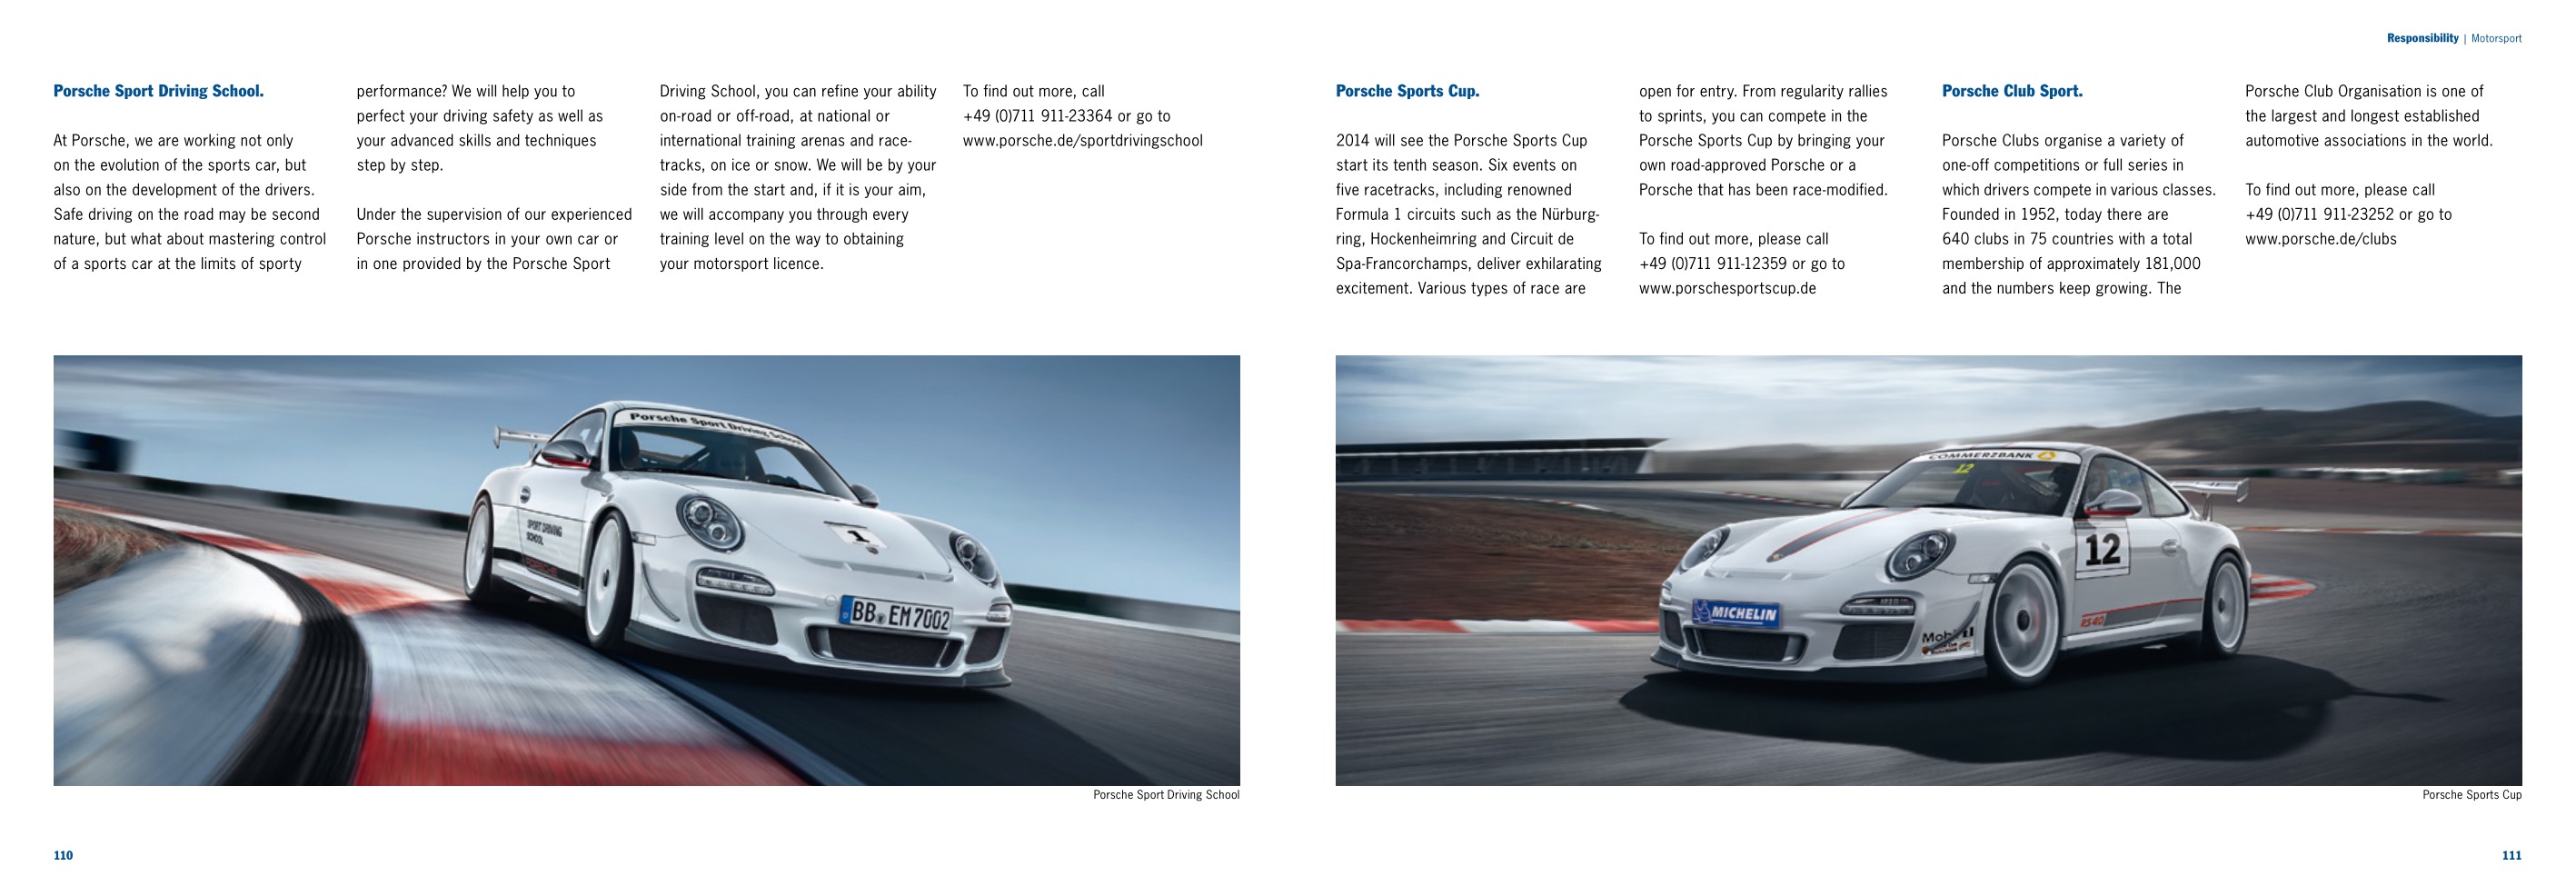 2015 Porsche 911 Brochure Page 29